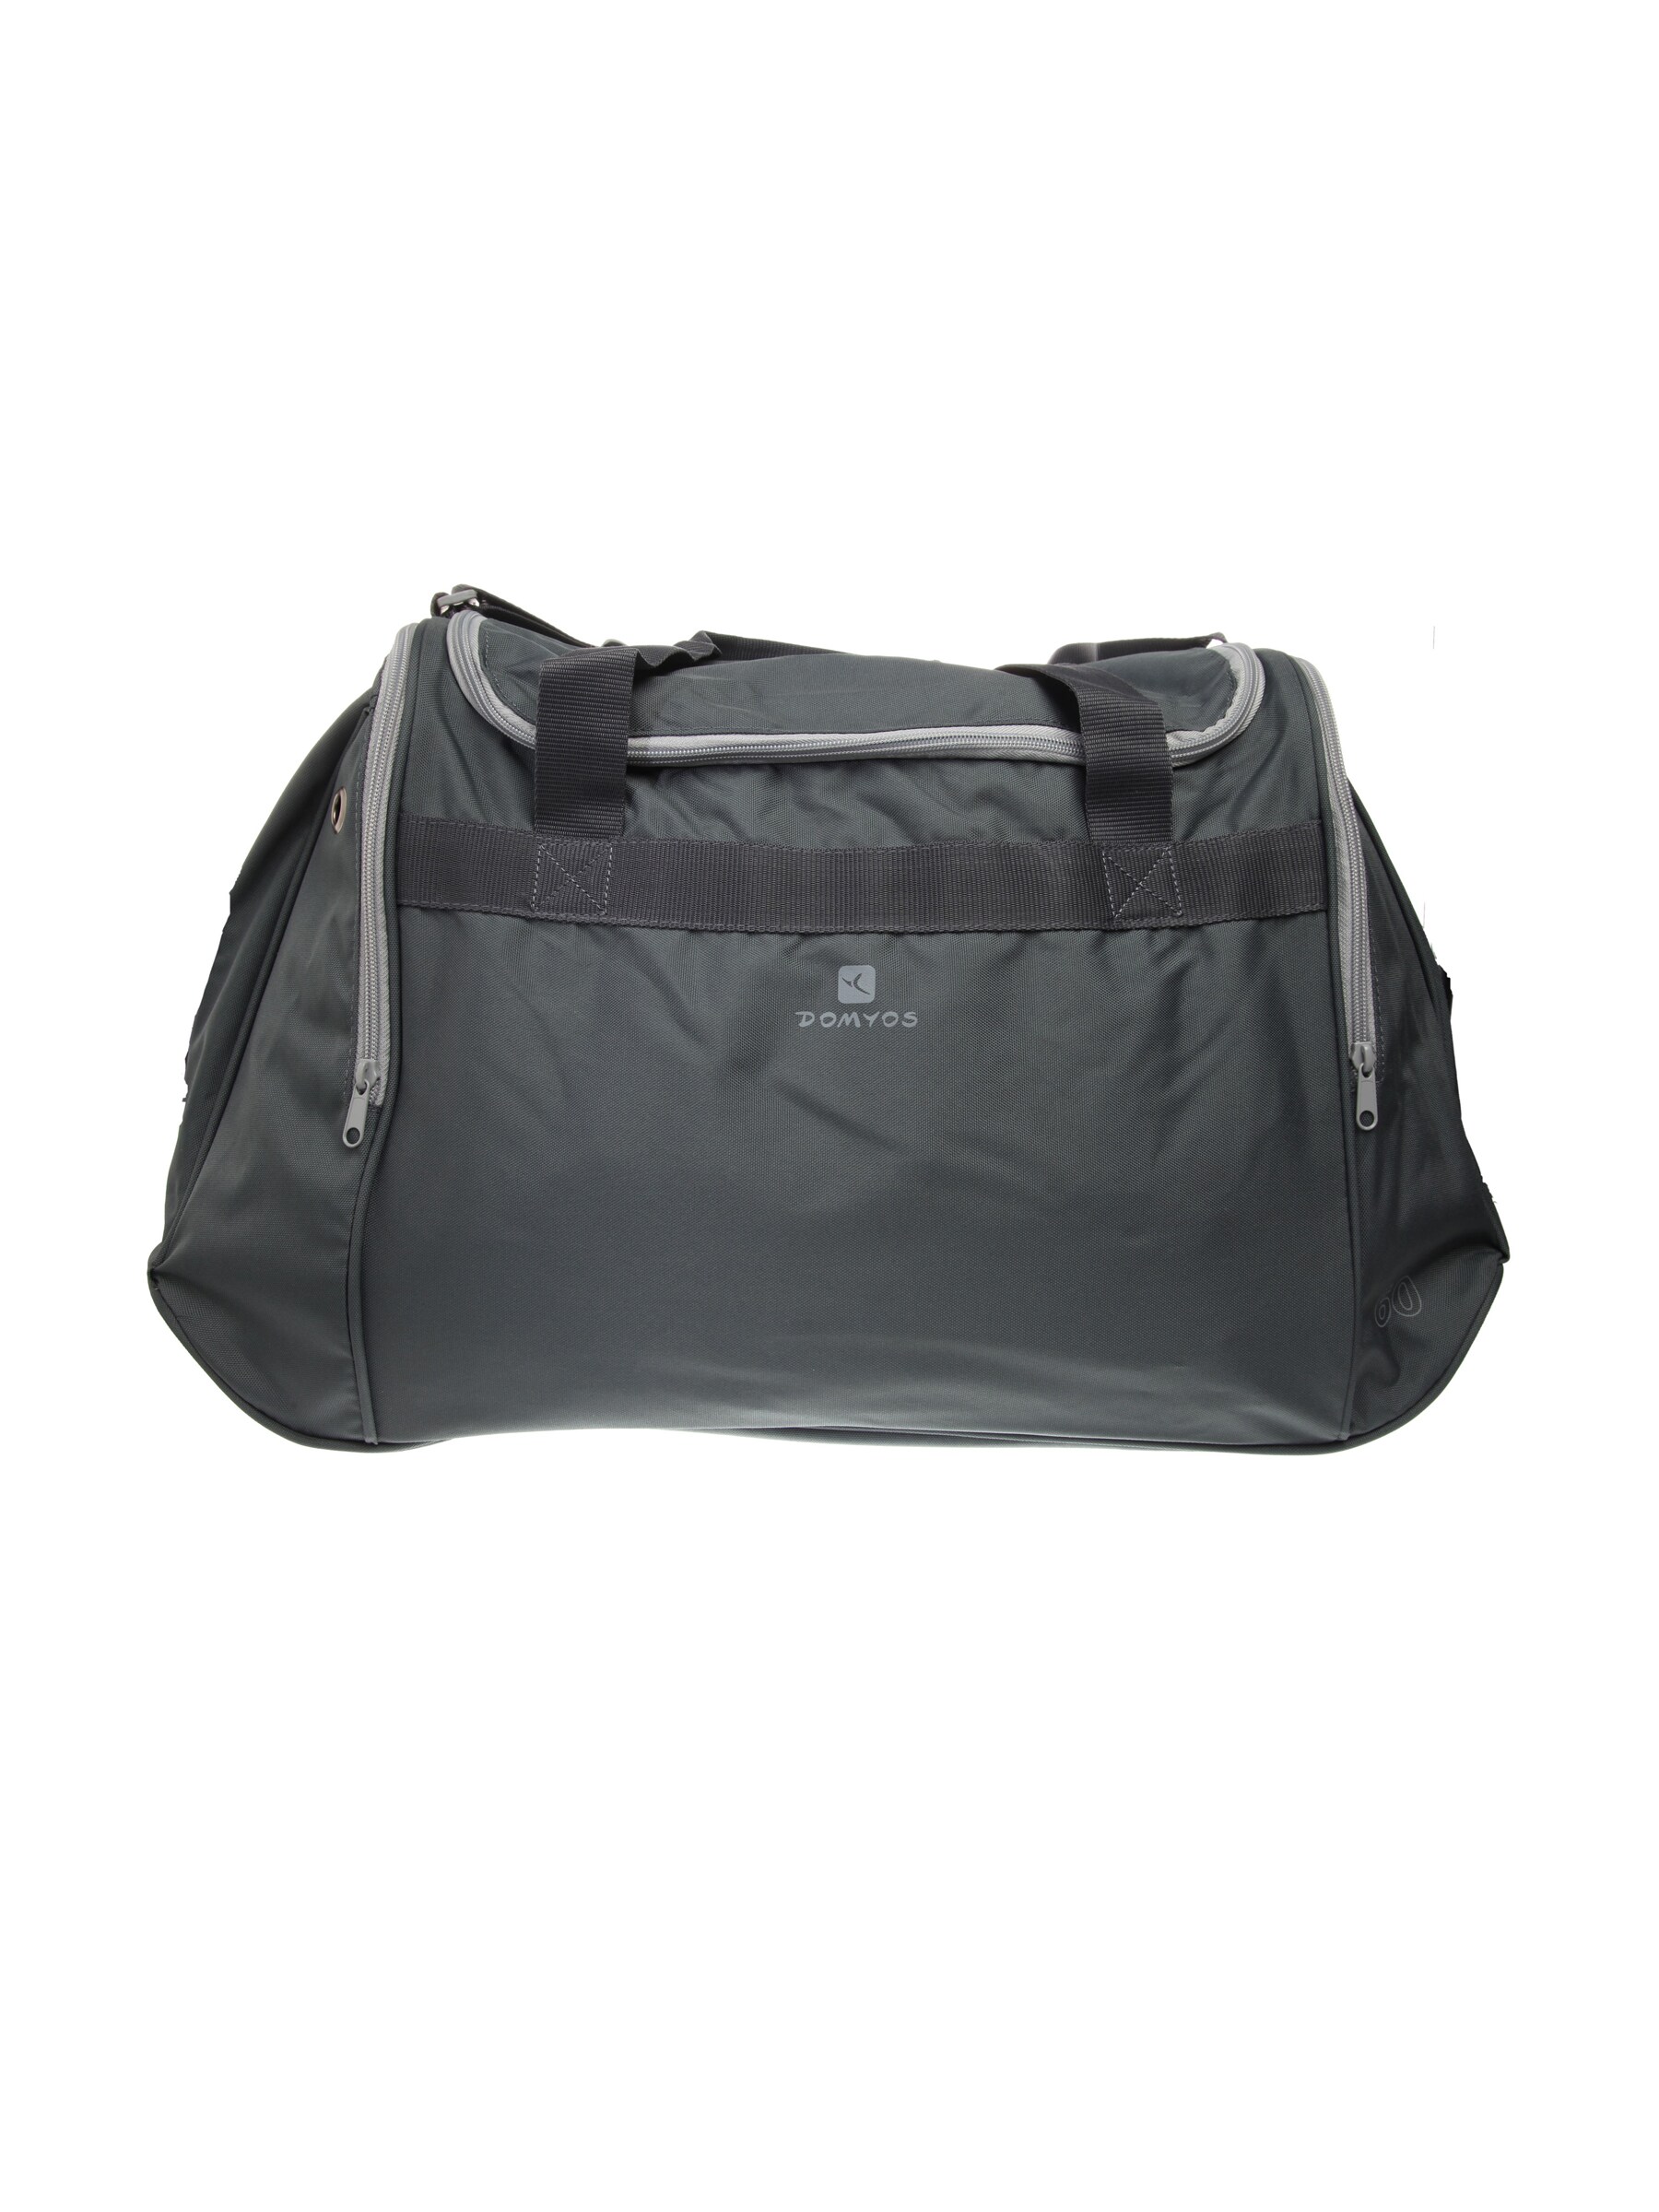 Domyos Grey Duffle Duffle Bag